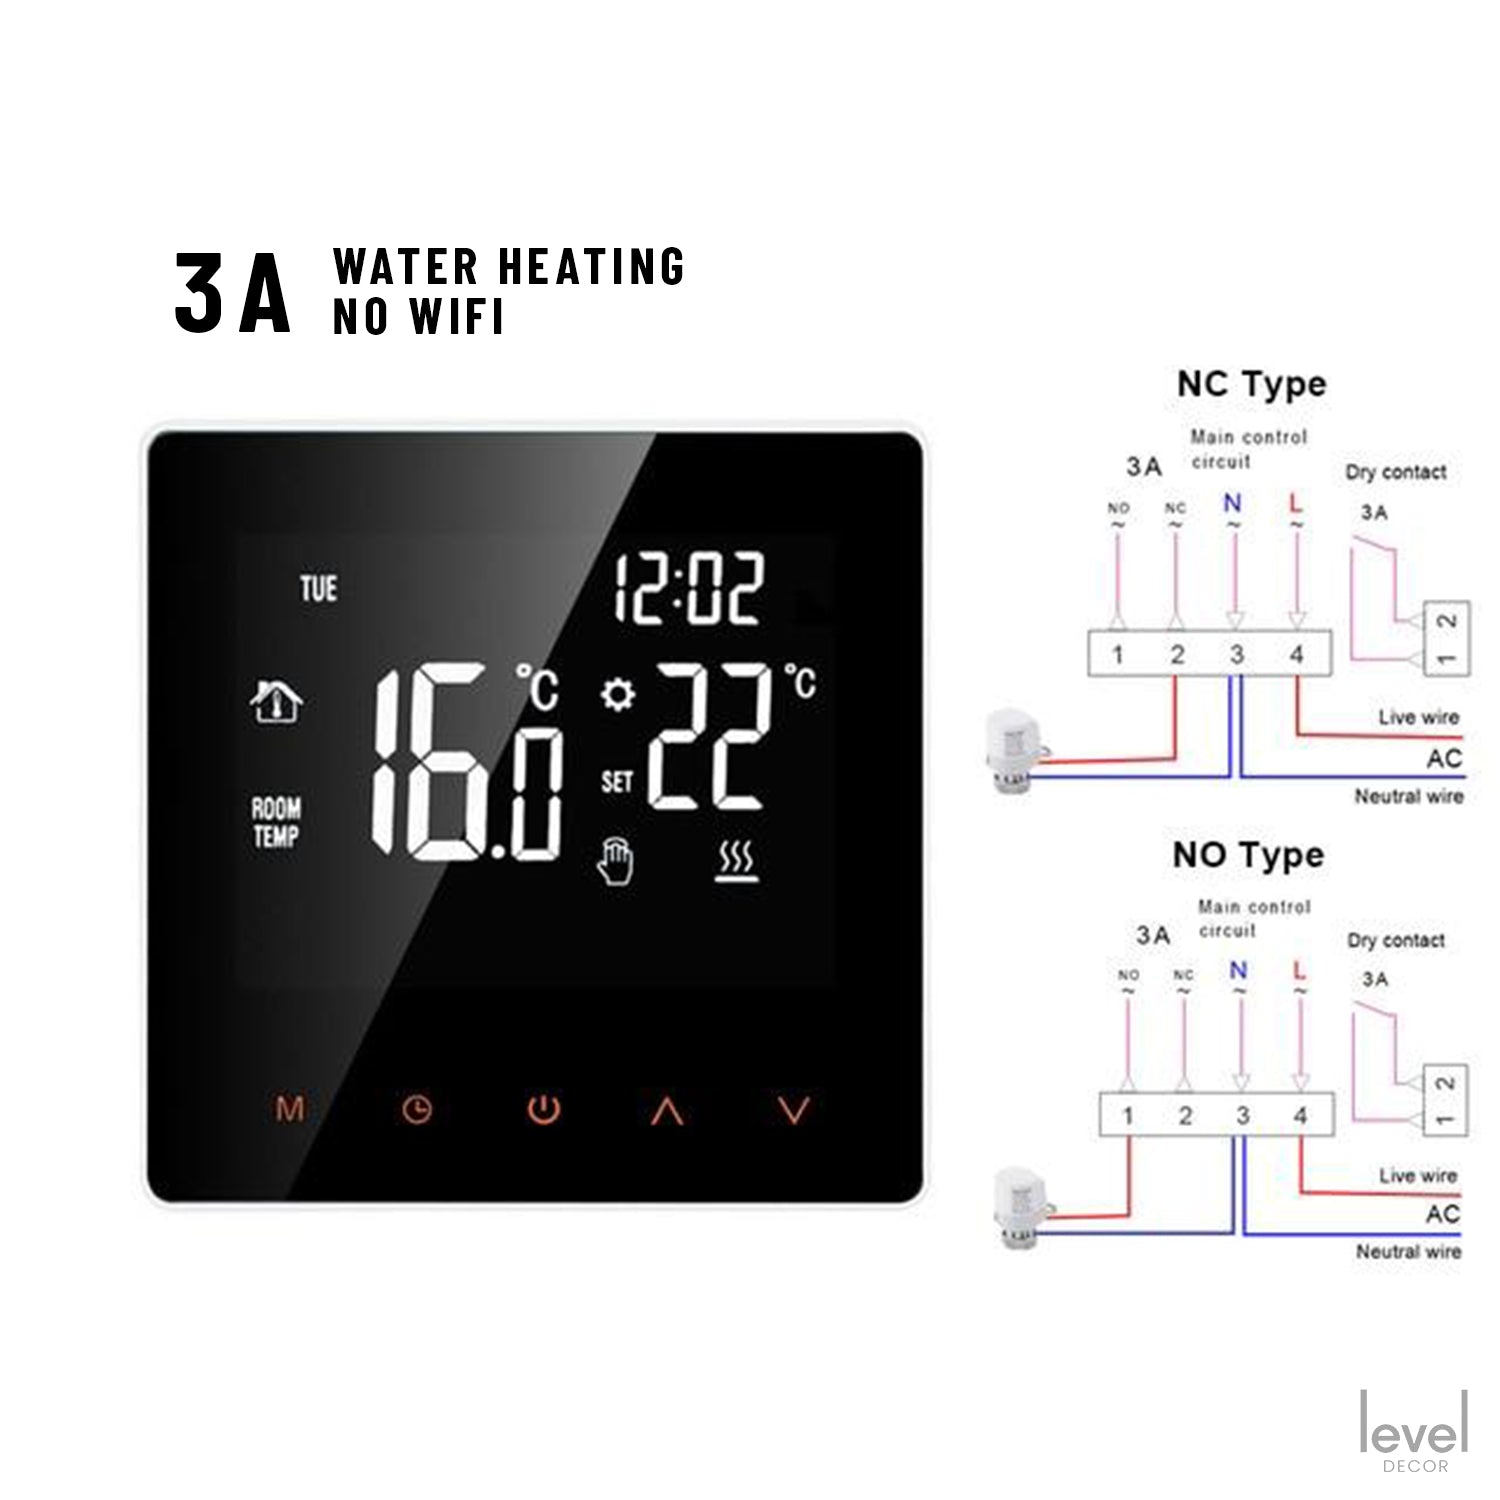 KETA WiFi Smart Thermostat | with Remote Controller for Google Home, Alexa - NO WiFi 3A Heating - Level Decor